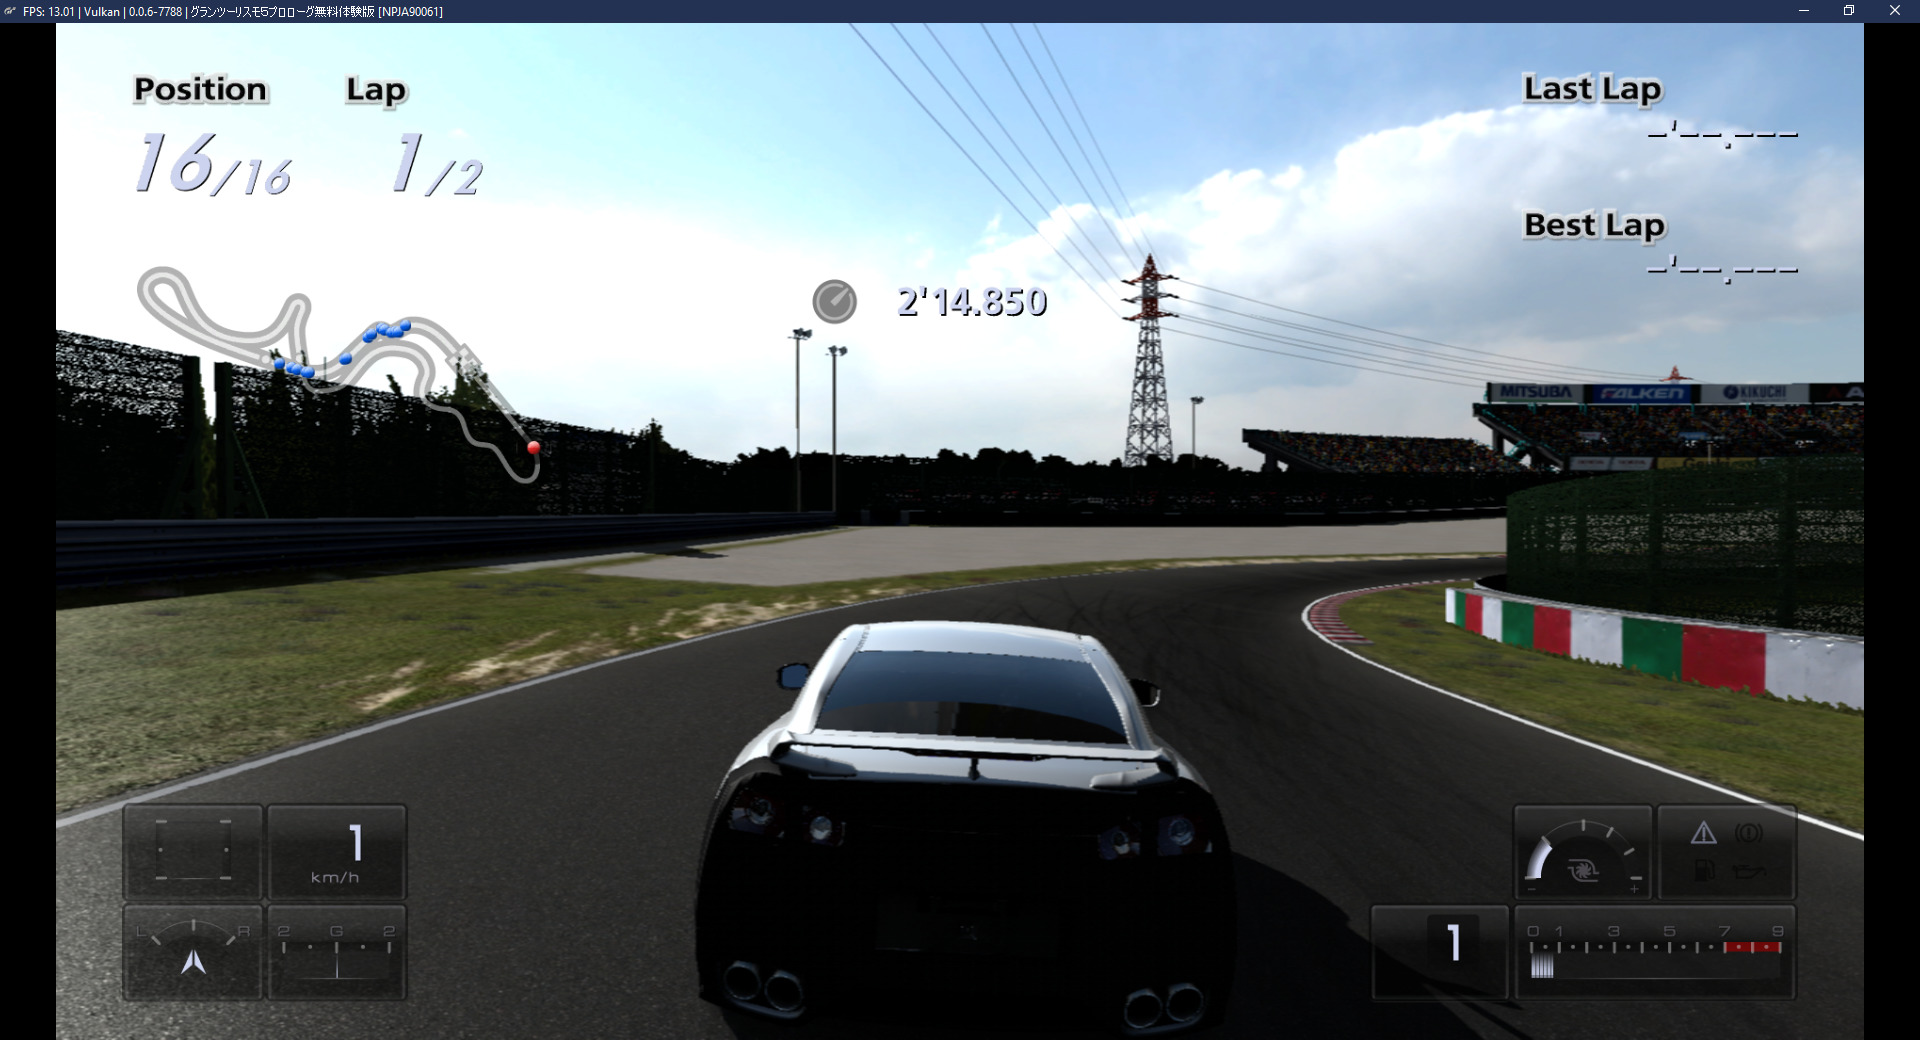 Gran Turismo 5, RPCS3 PS3 Emulator, PC Performance Test